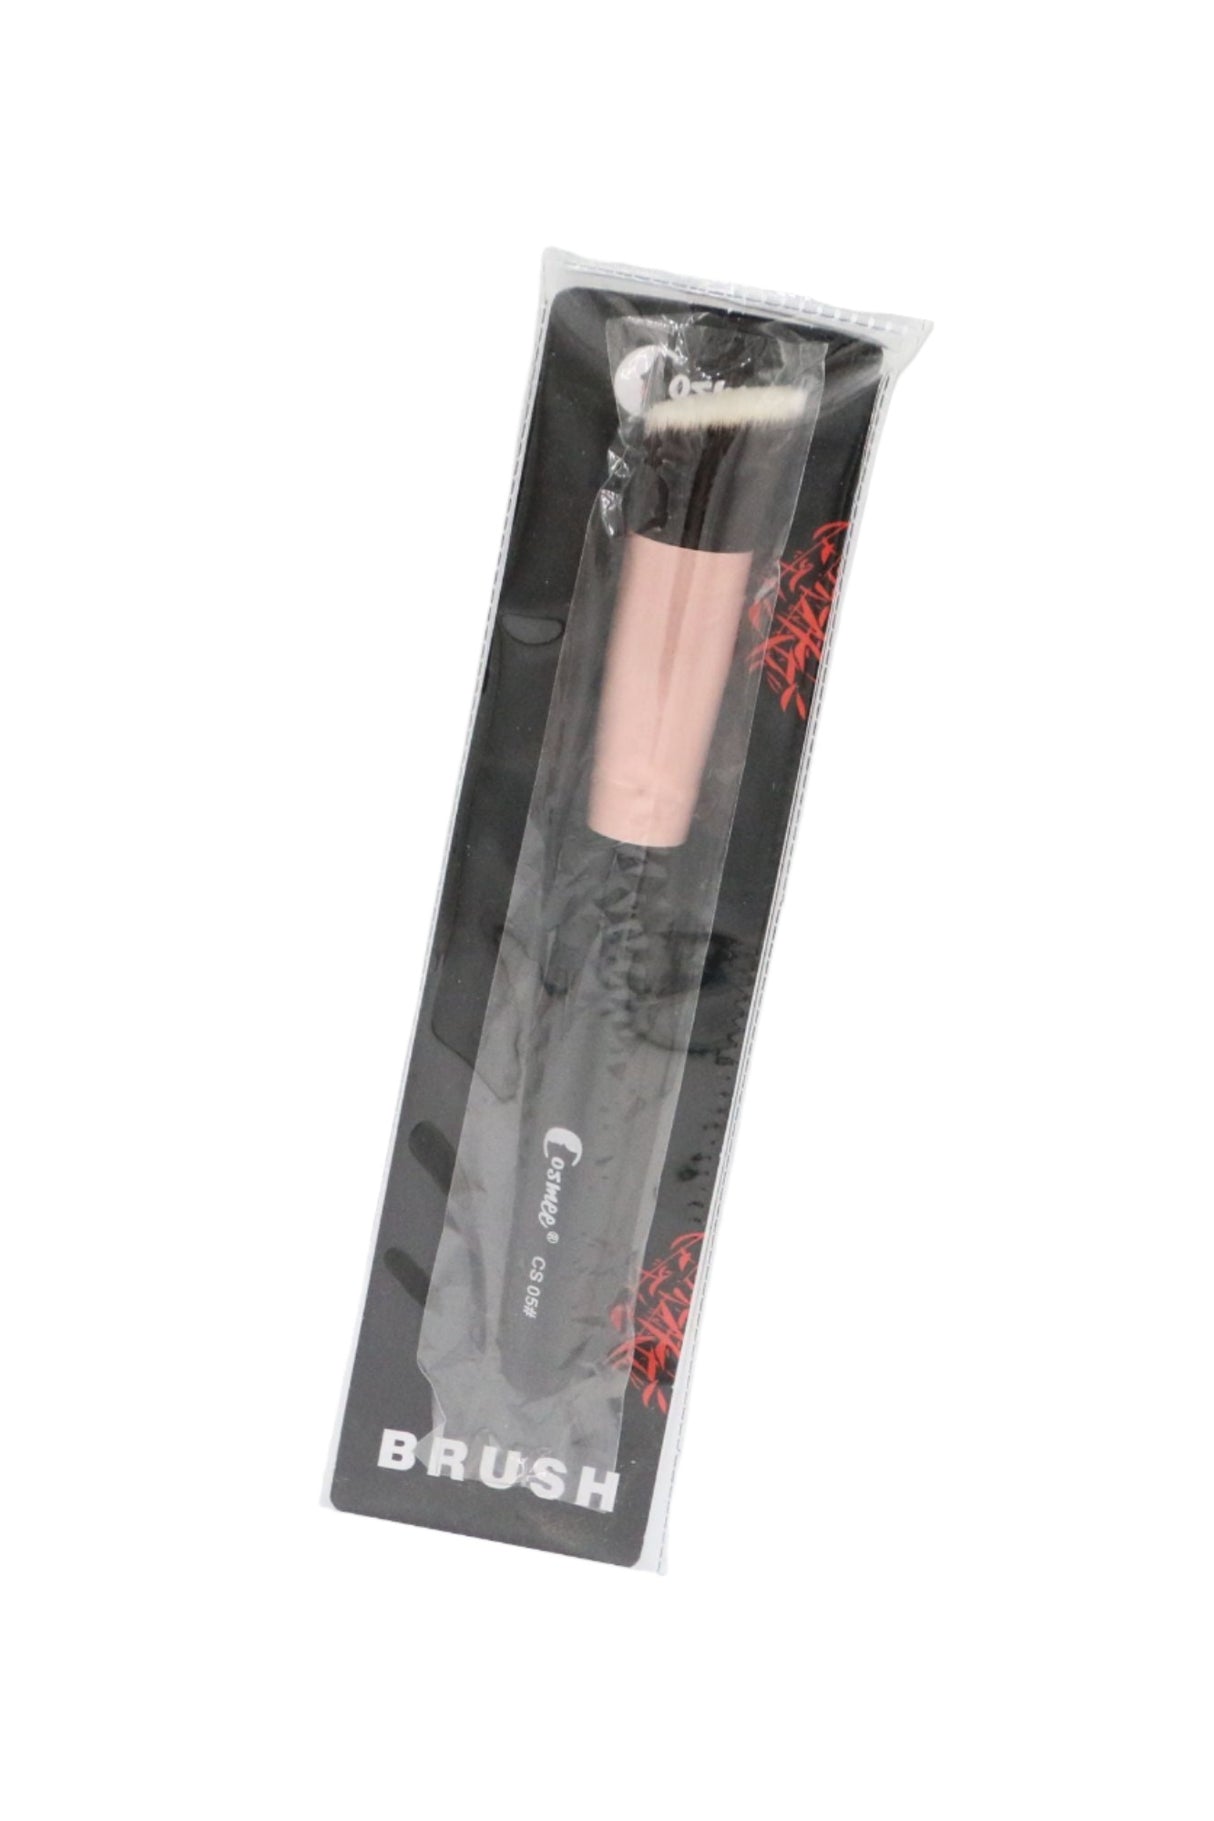 cosmee makeup brush 05